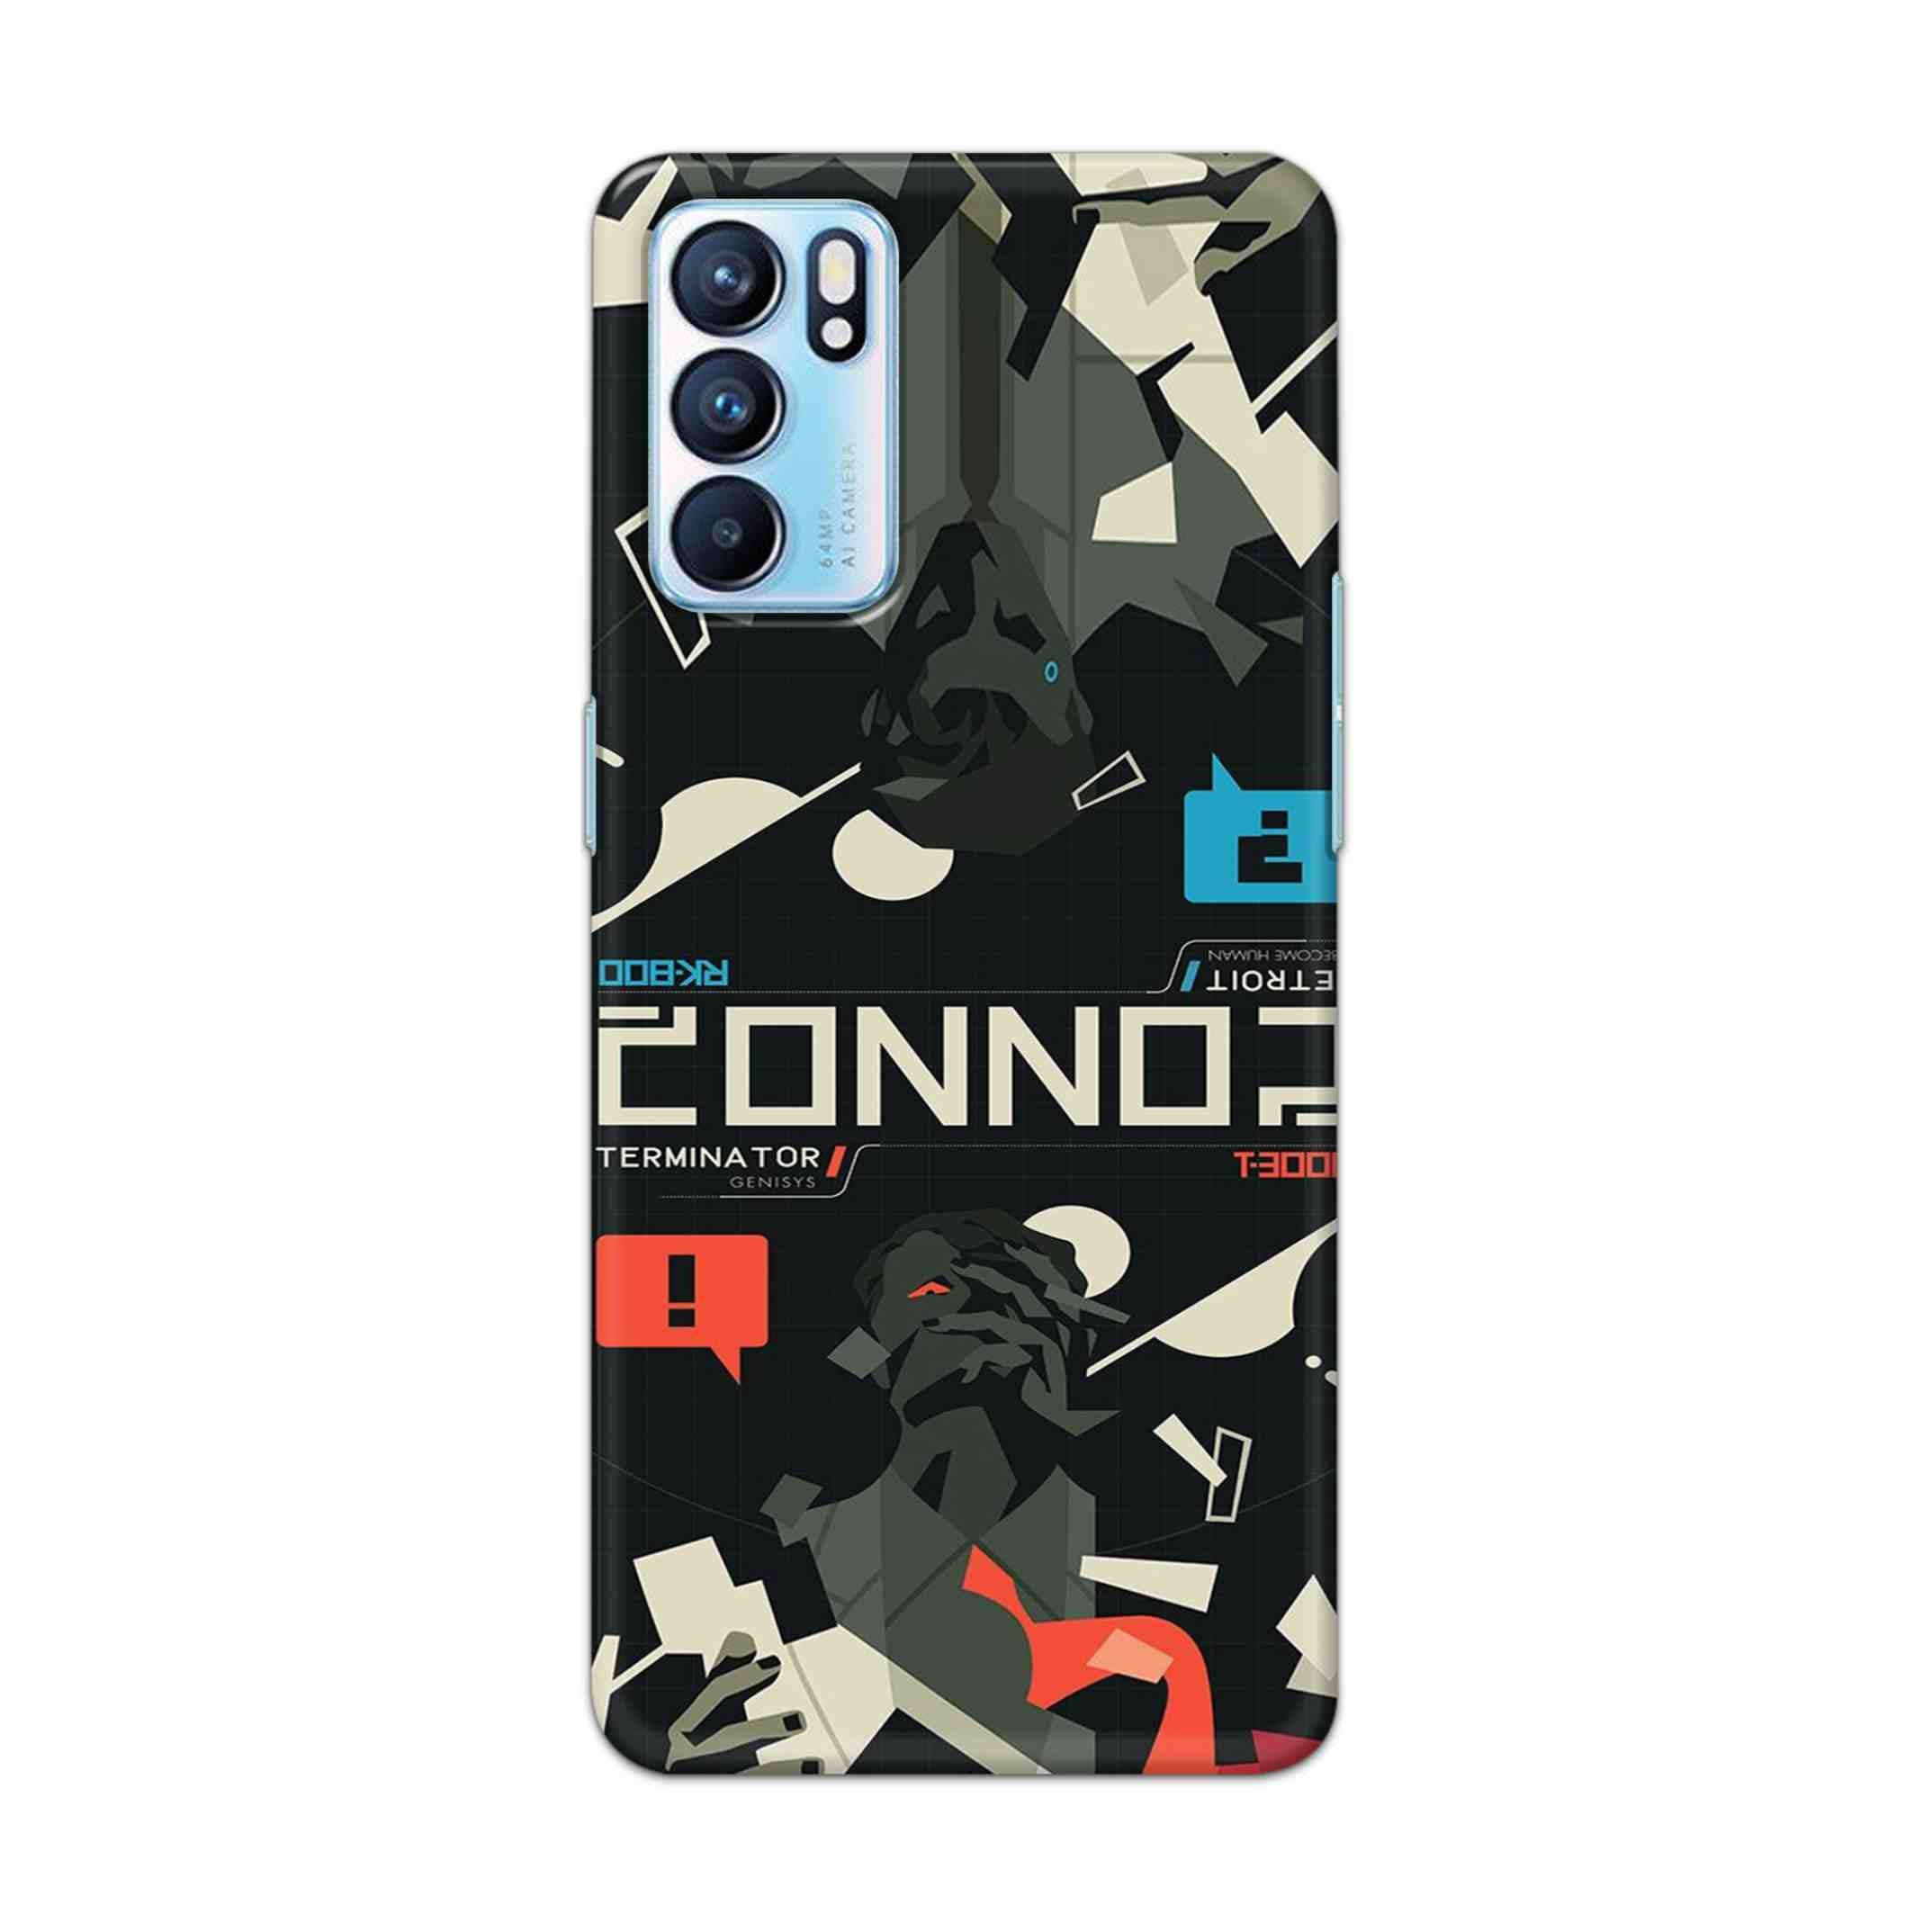 Buy Terminator Hard Back Mobile Phone Case Cover For OPPO RENO 6 5G Online